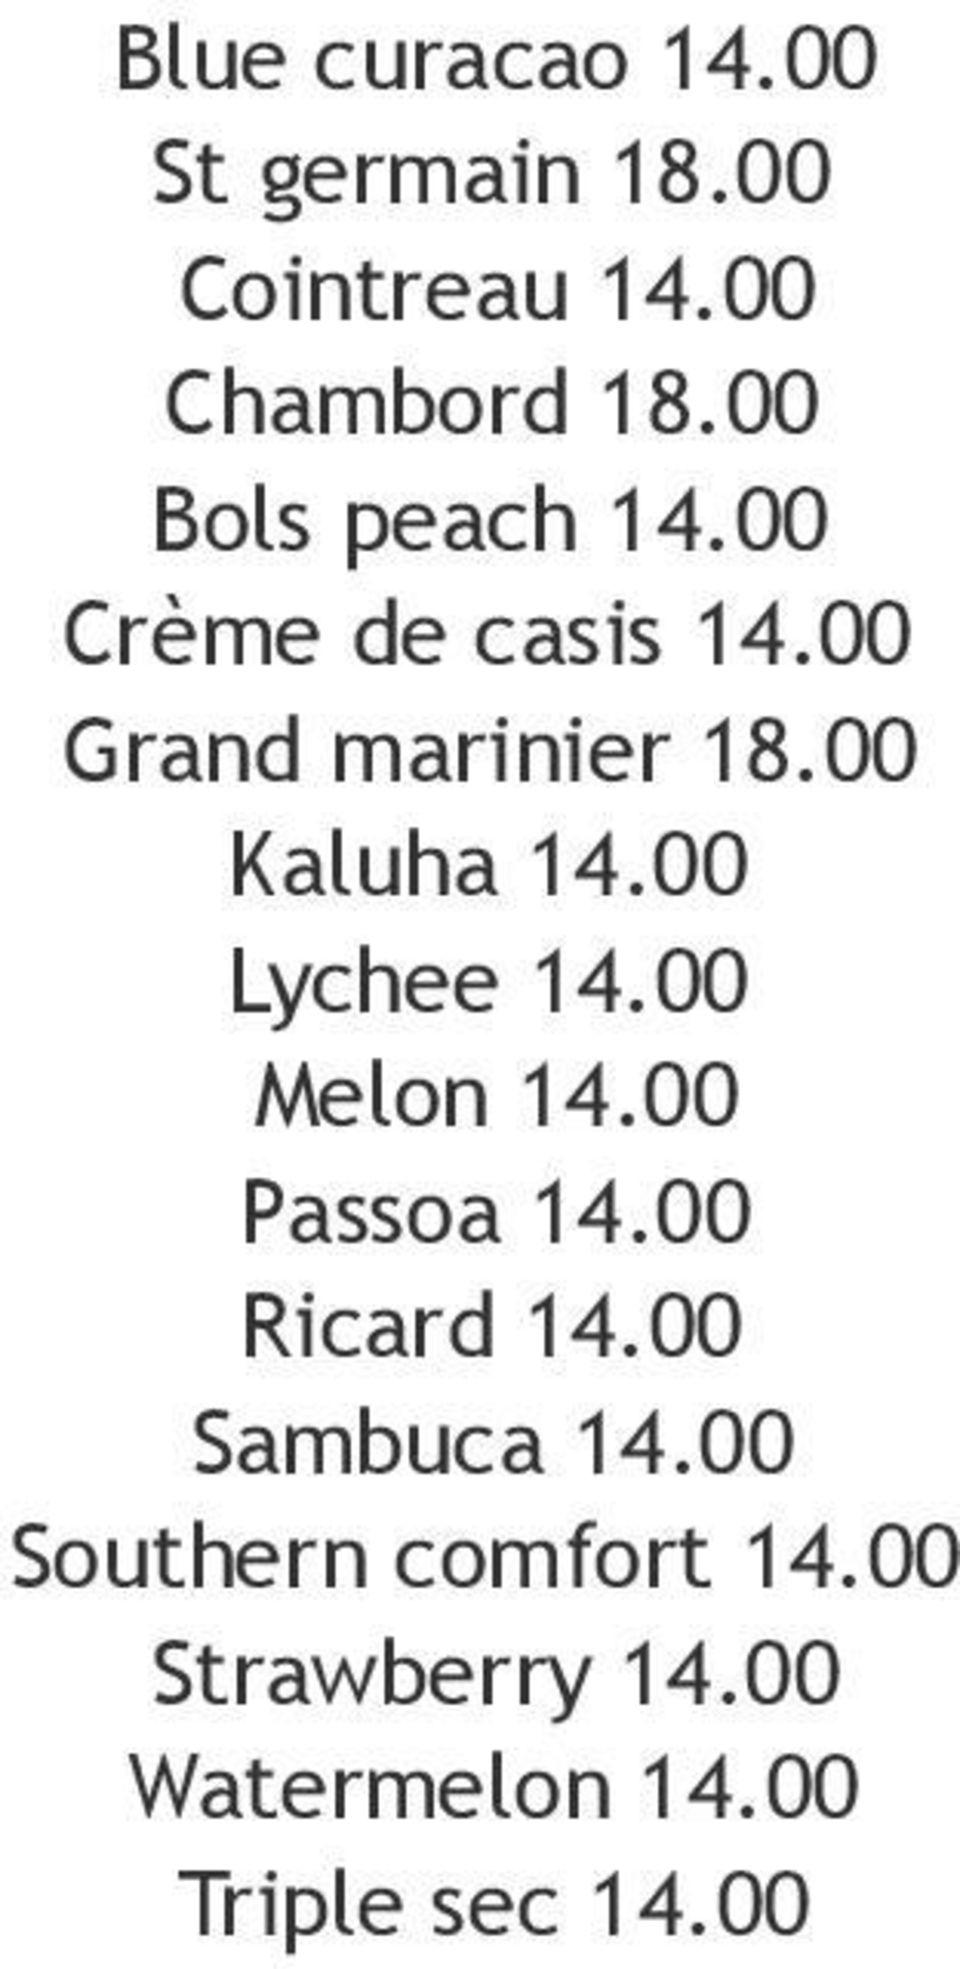 00 Kaluha 14.00 Lychee 14.00 Melon 14.00 Passoa 14.00 Ricard 14.